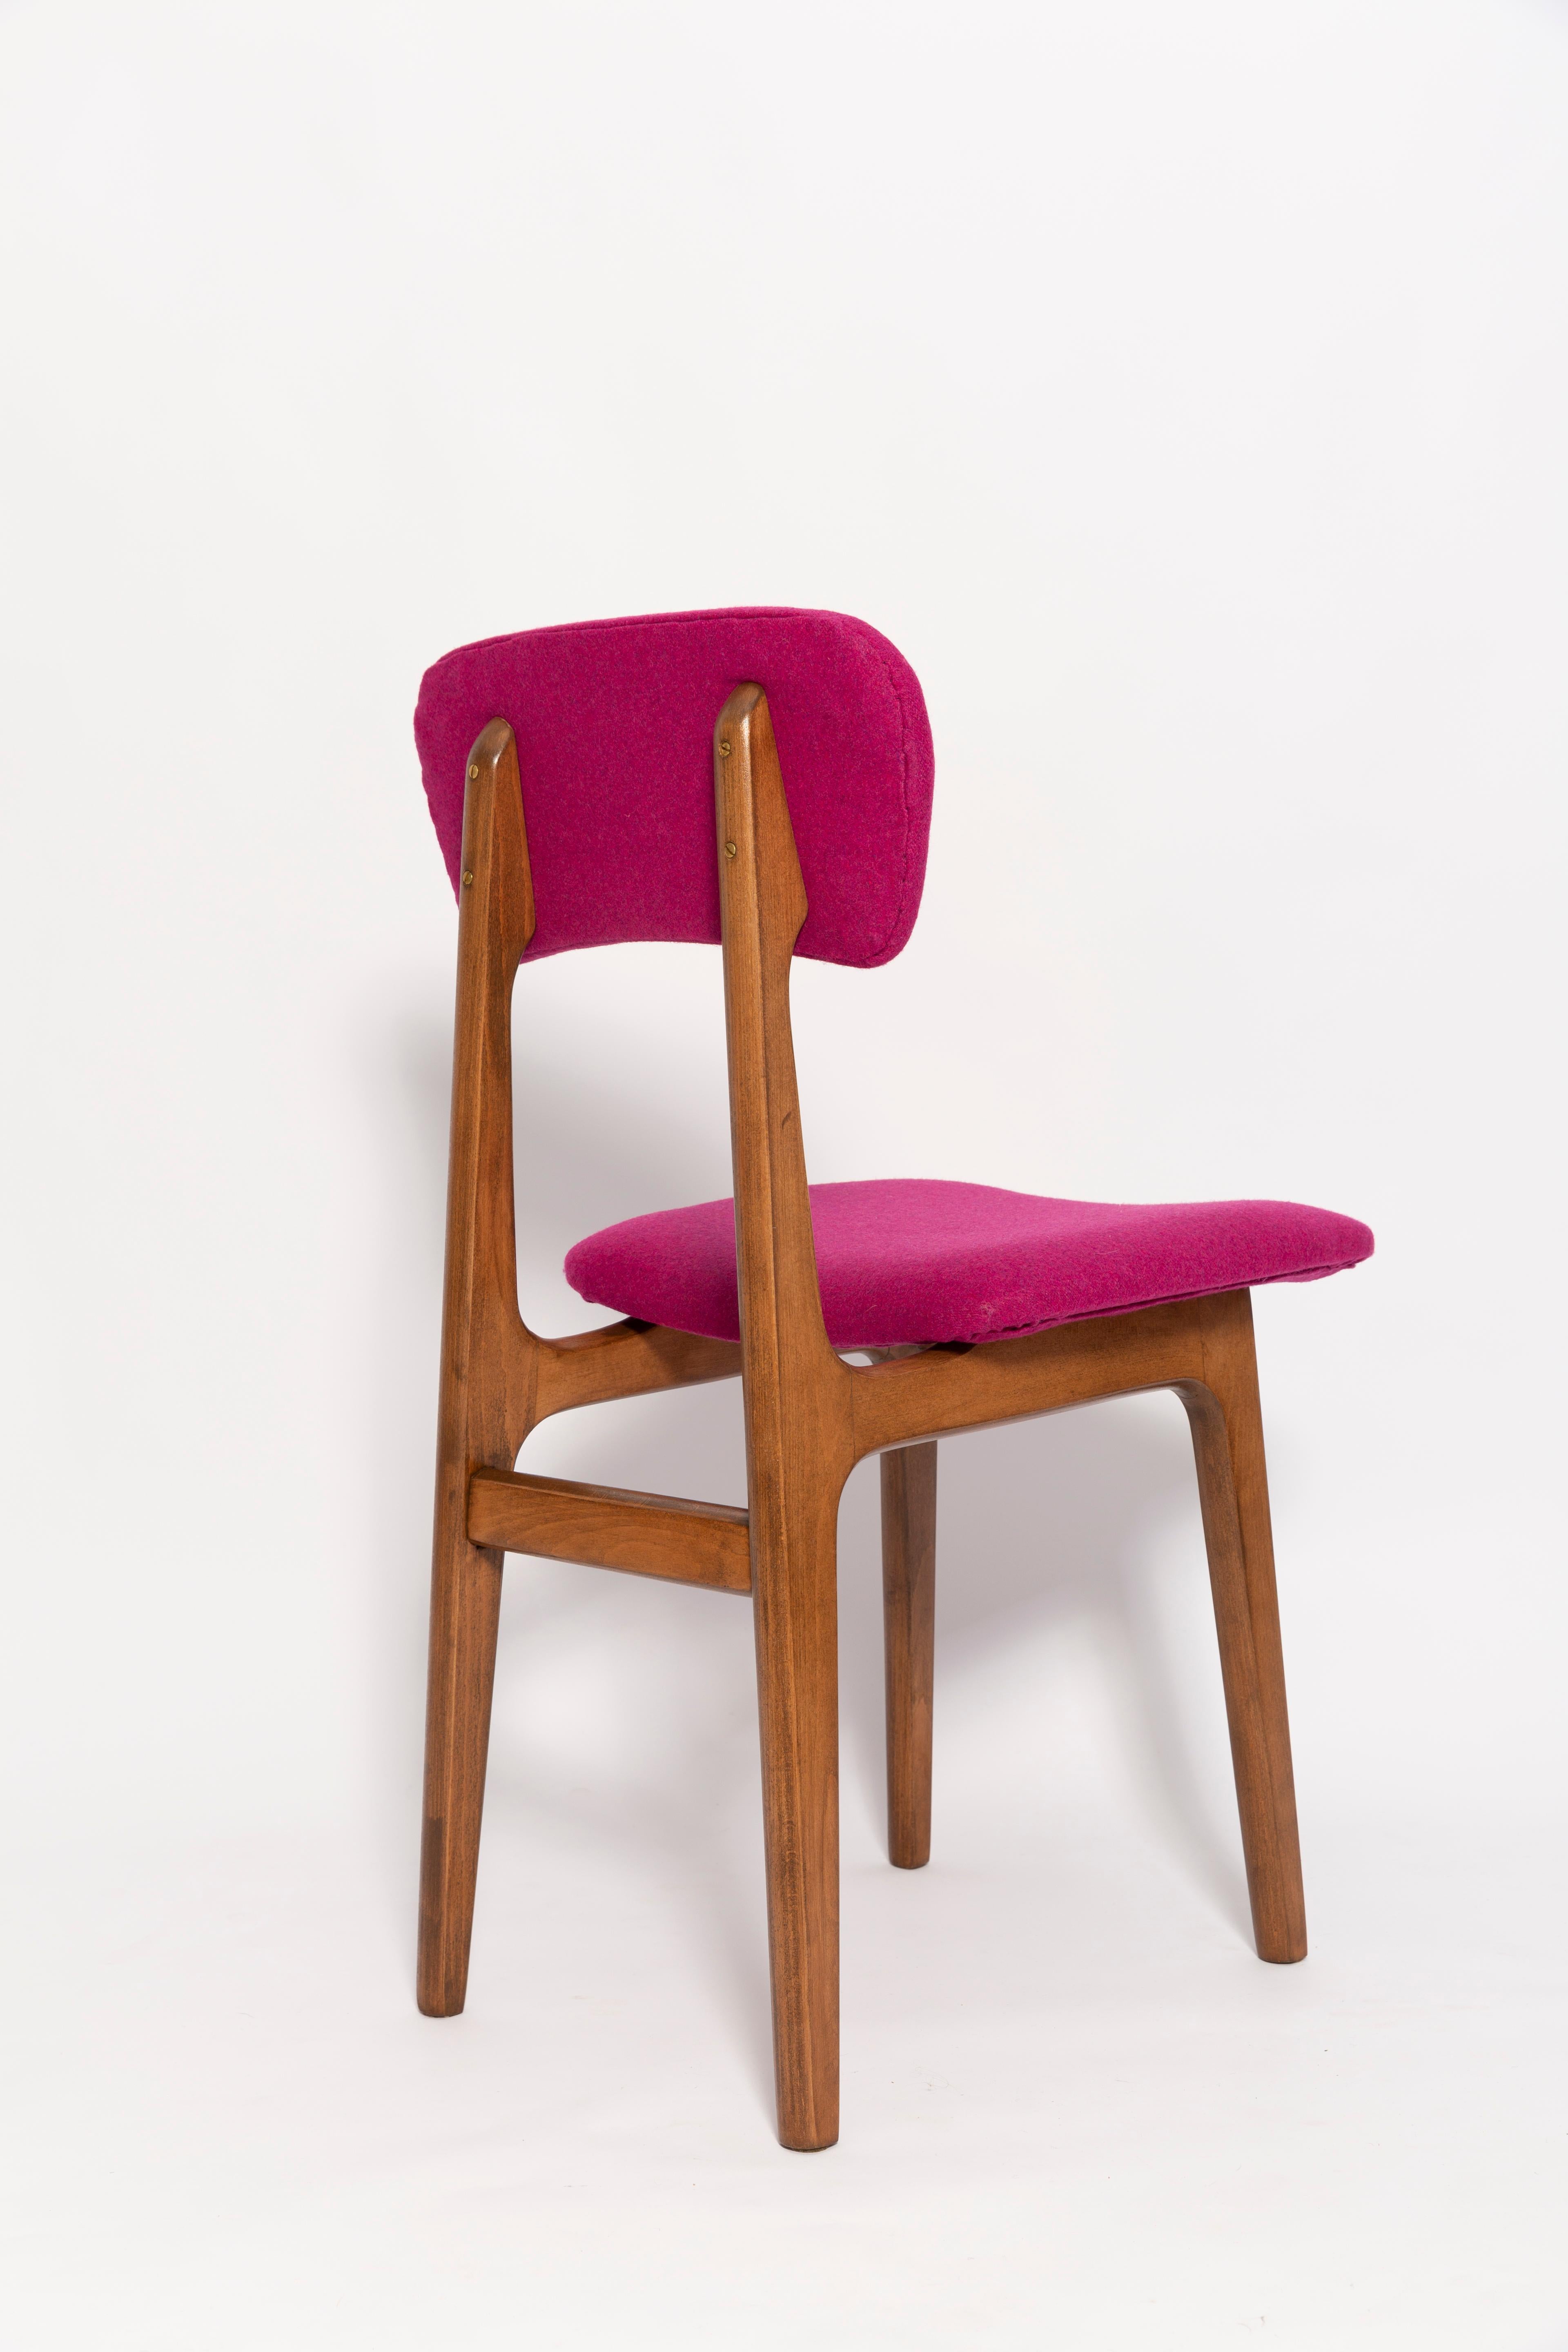 Set of Five Mid Century Wool Chairs, Rajmund Halas, Europe, 1960s For Sale 2